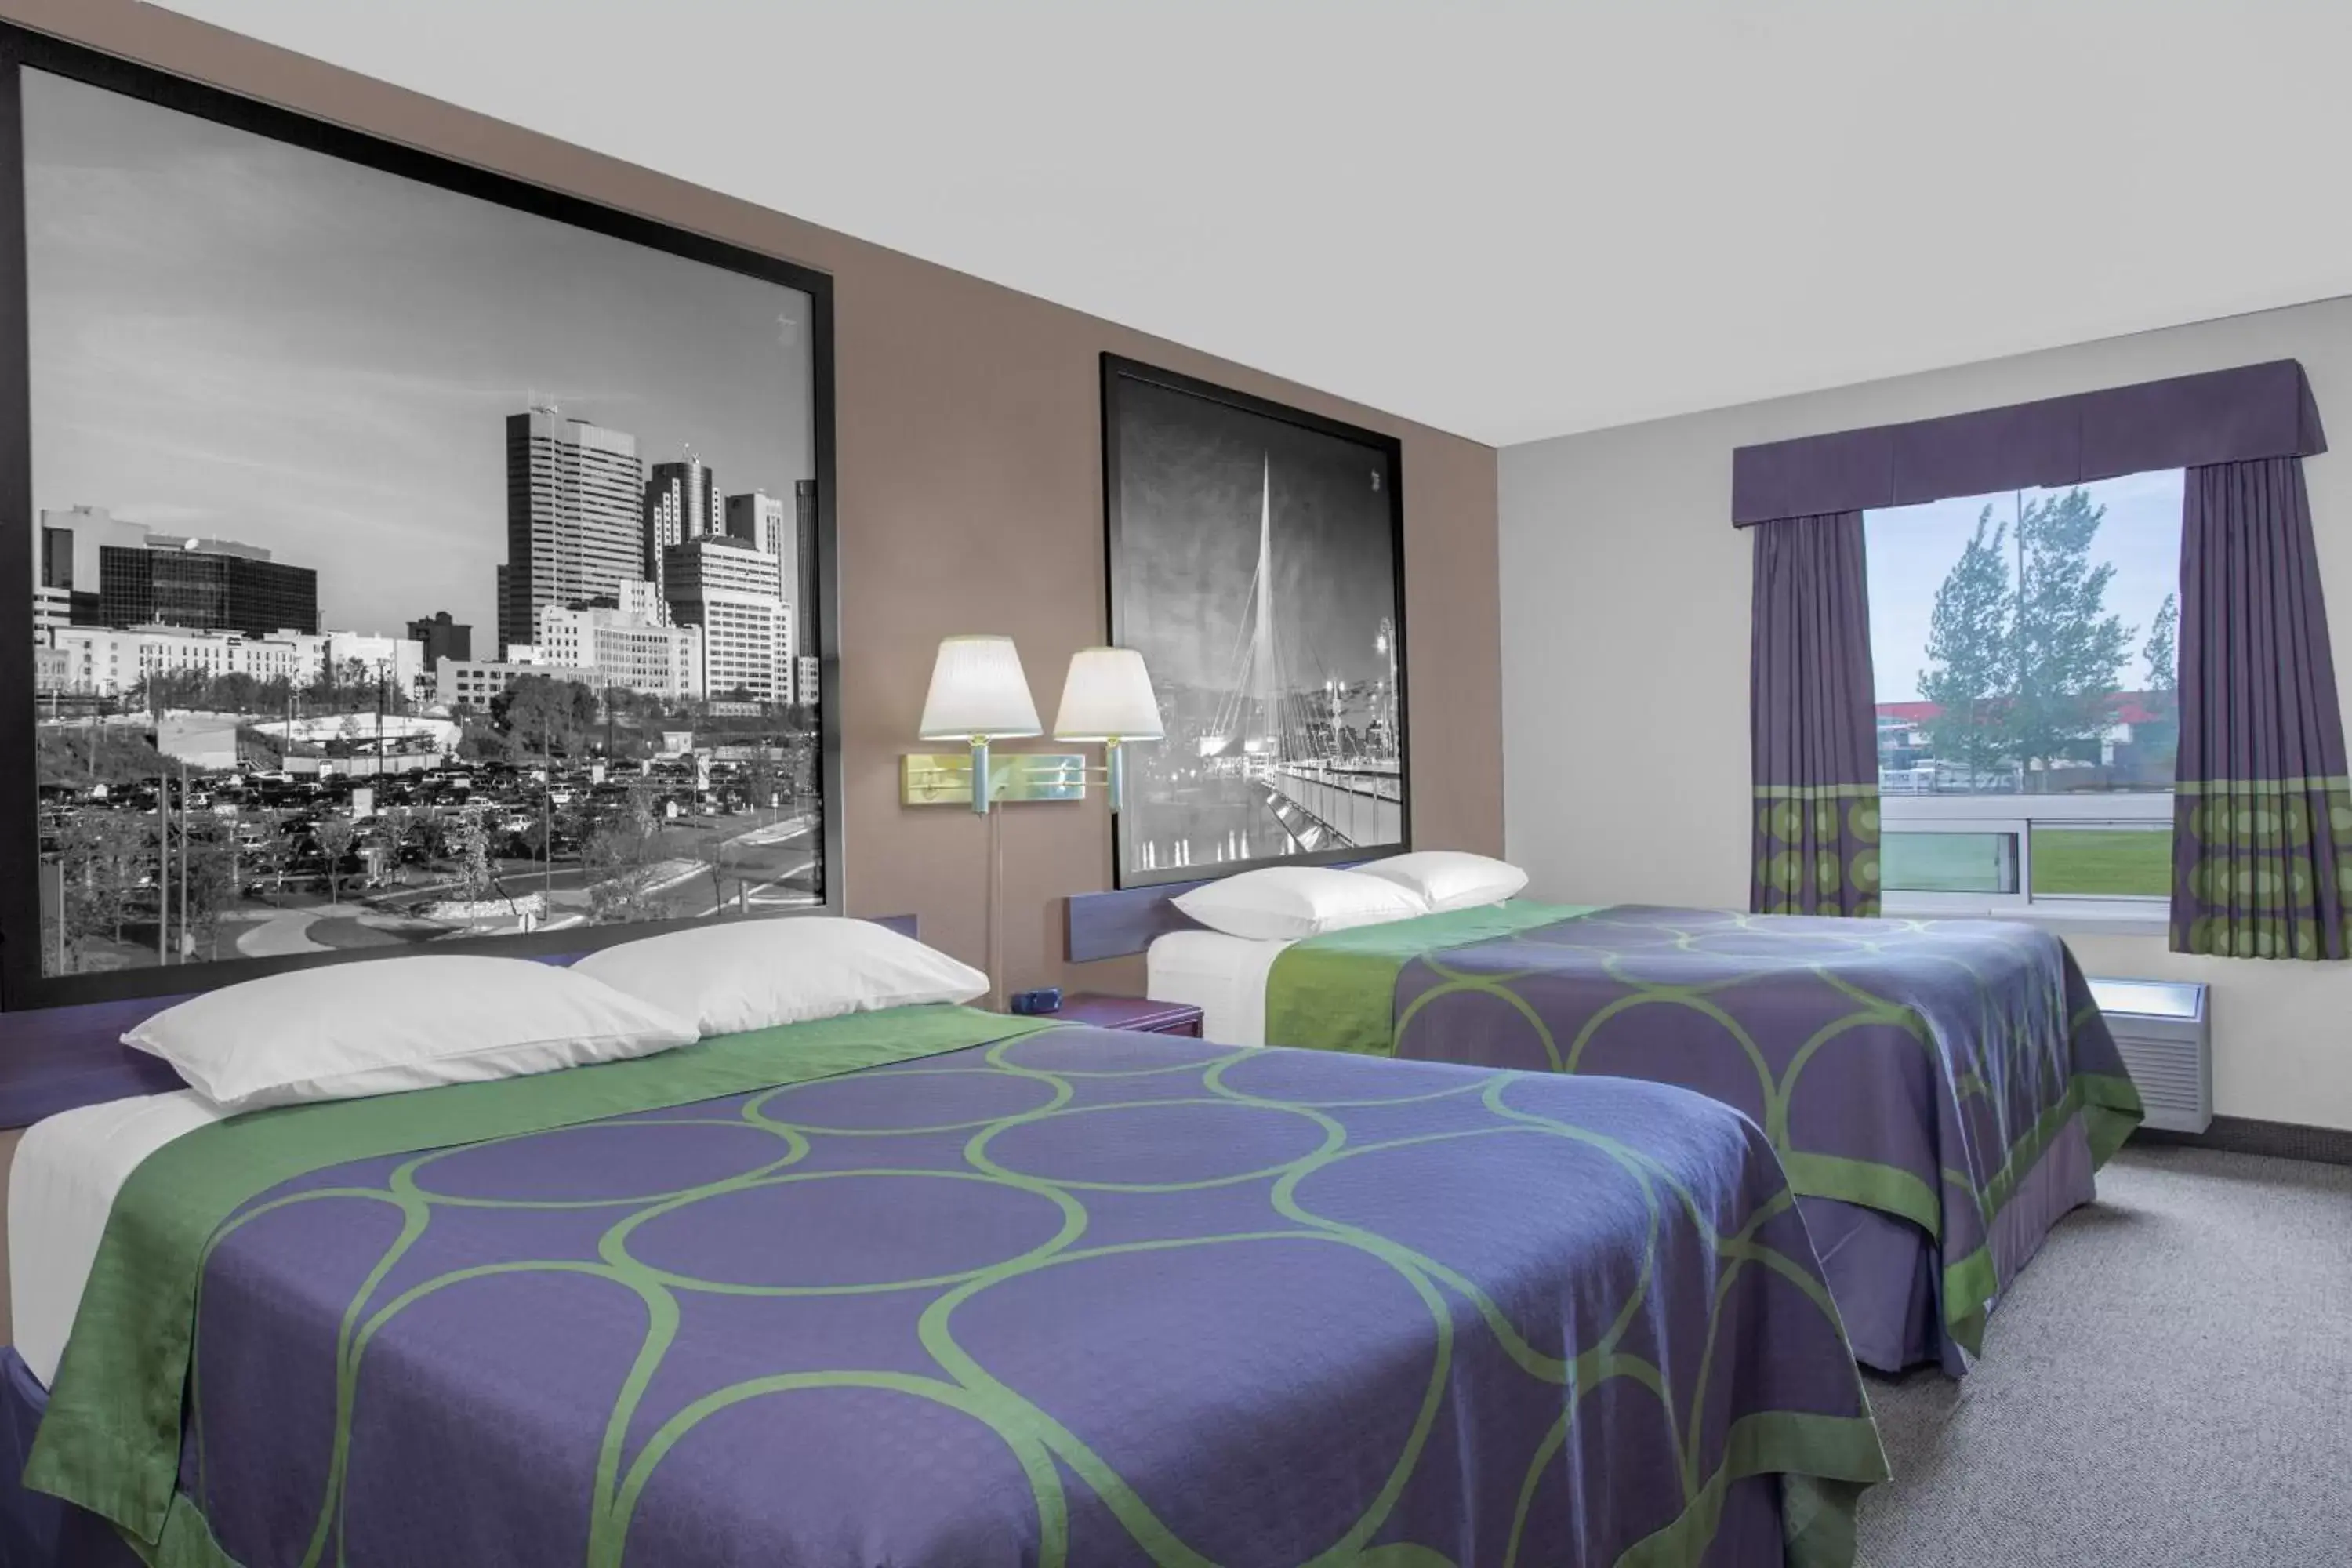 Bed, Room Photo in Super 8 by Wyndham Portage La Prairie MB